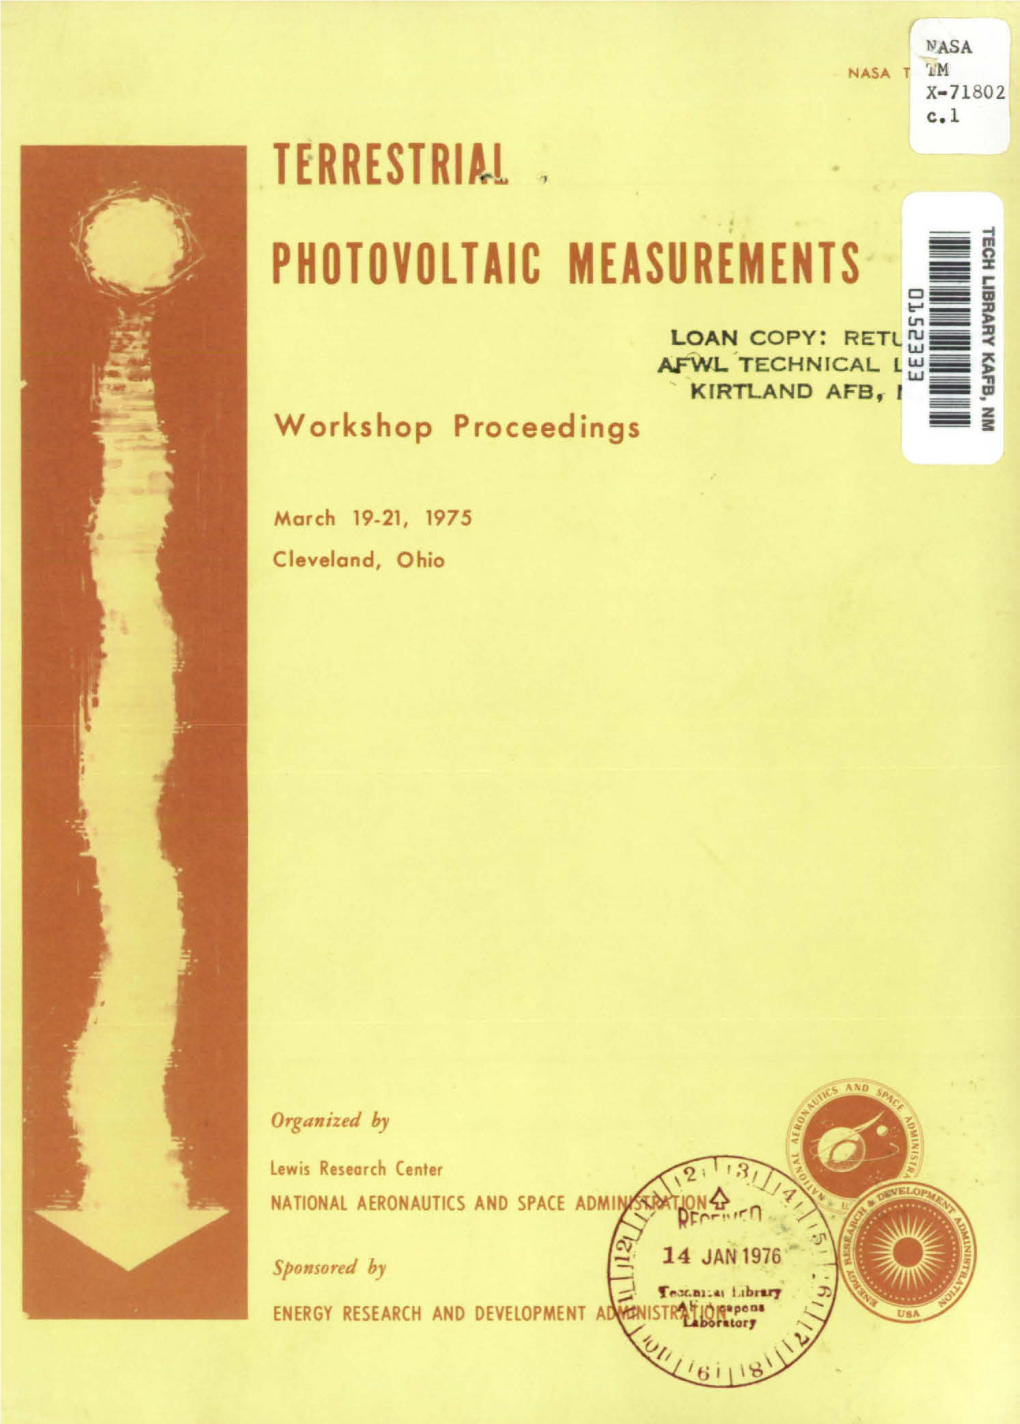 Measurements Photovoltaic Terrestrial